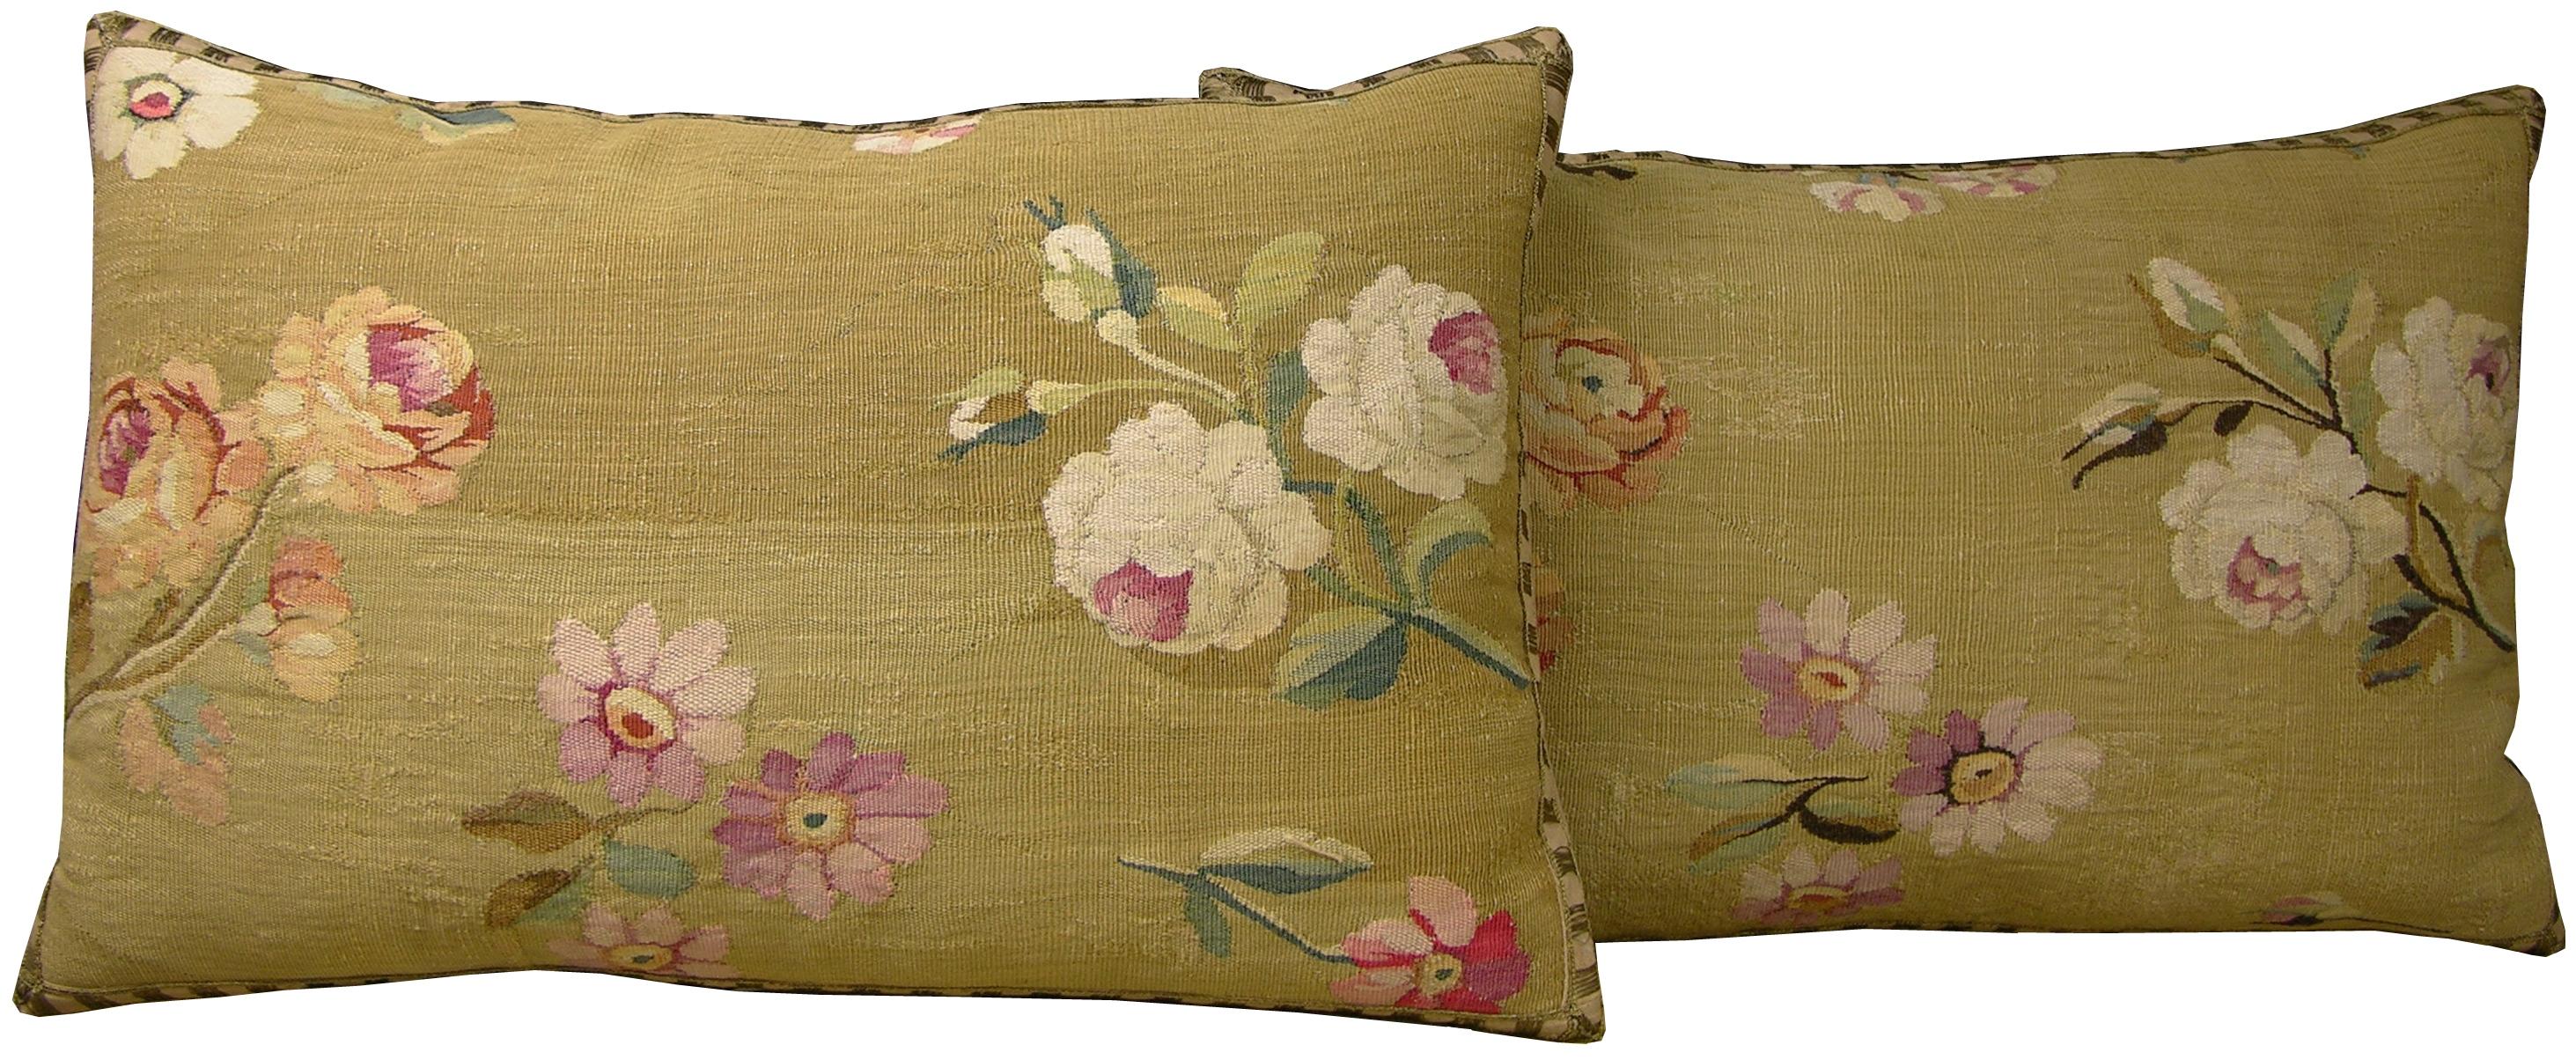 Pair of French Aubusson pillows, circa 1860 (1706p - 1707p).